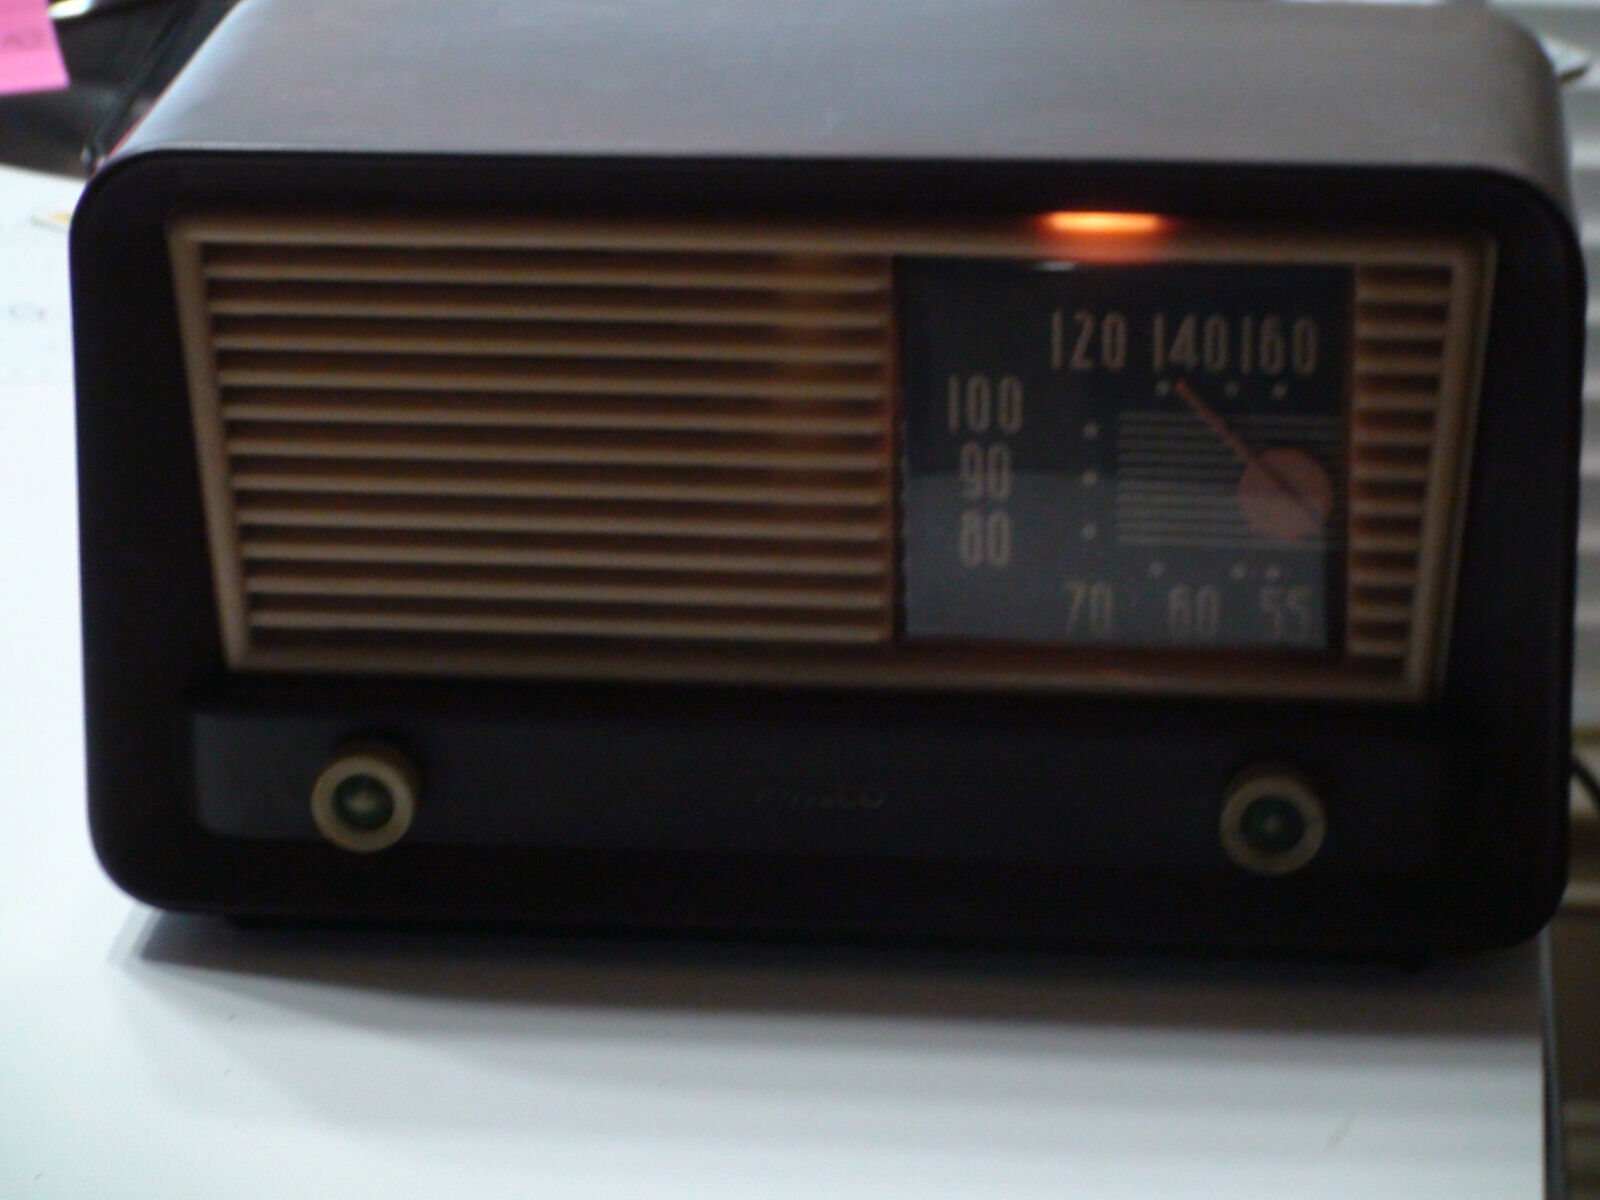 Vintage 1949 Philco Model 49-902 Bakelite AM Radio - Powers On -Front Light On